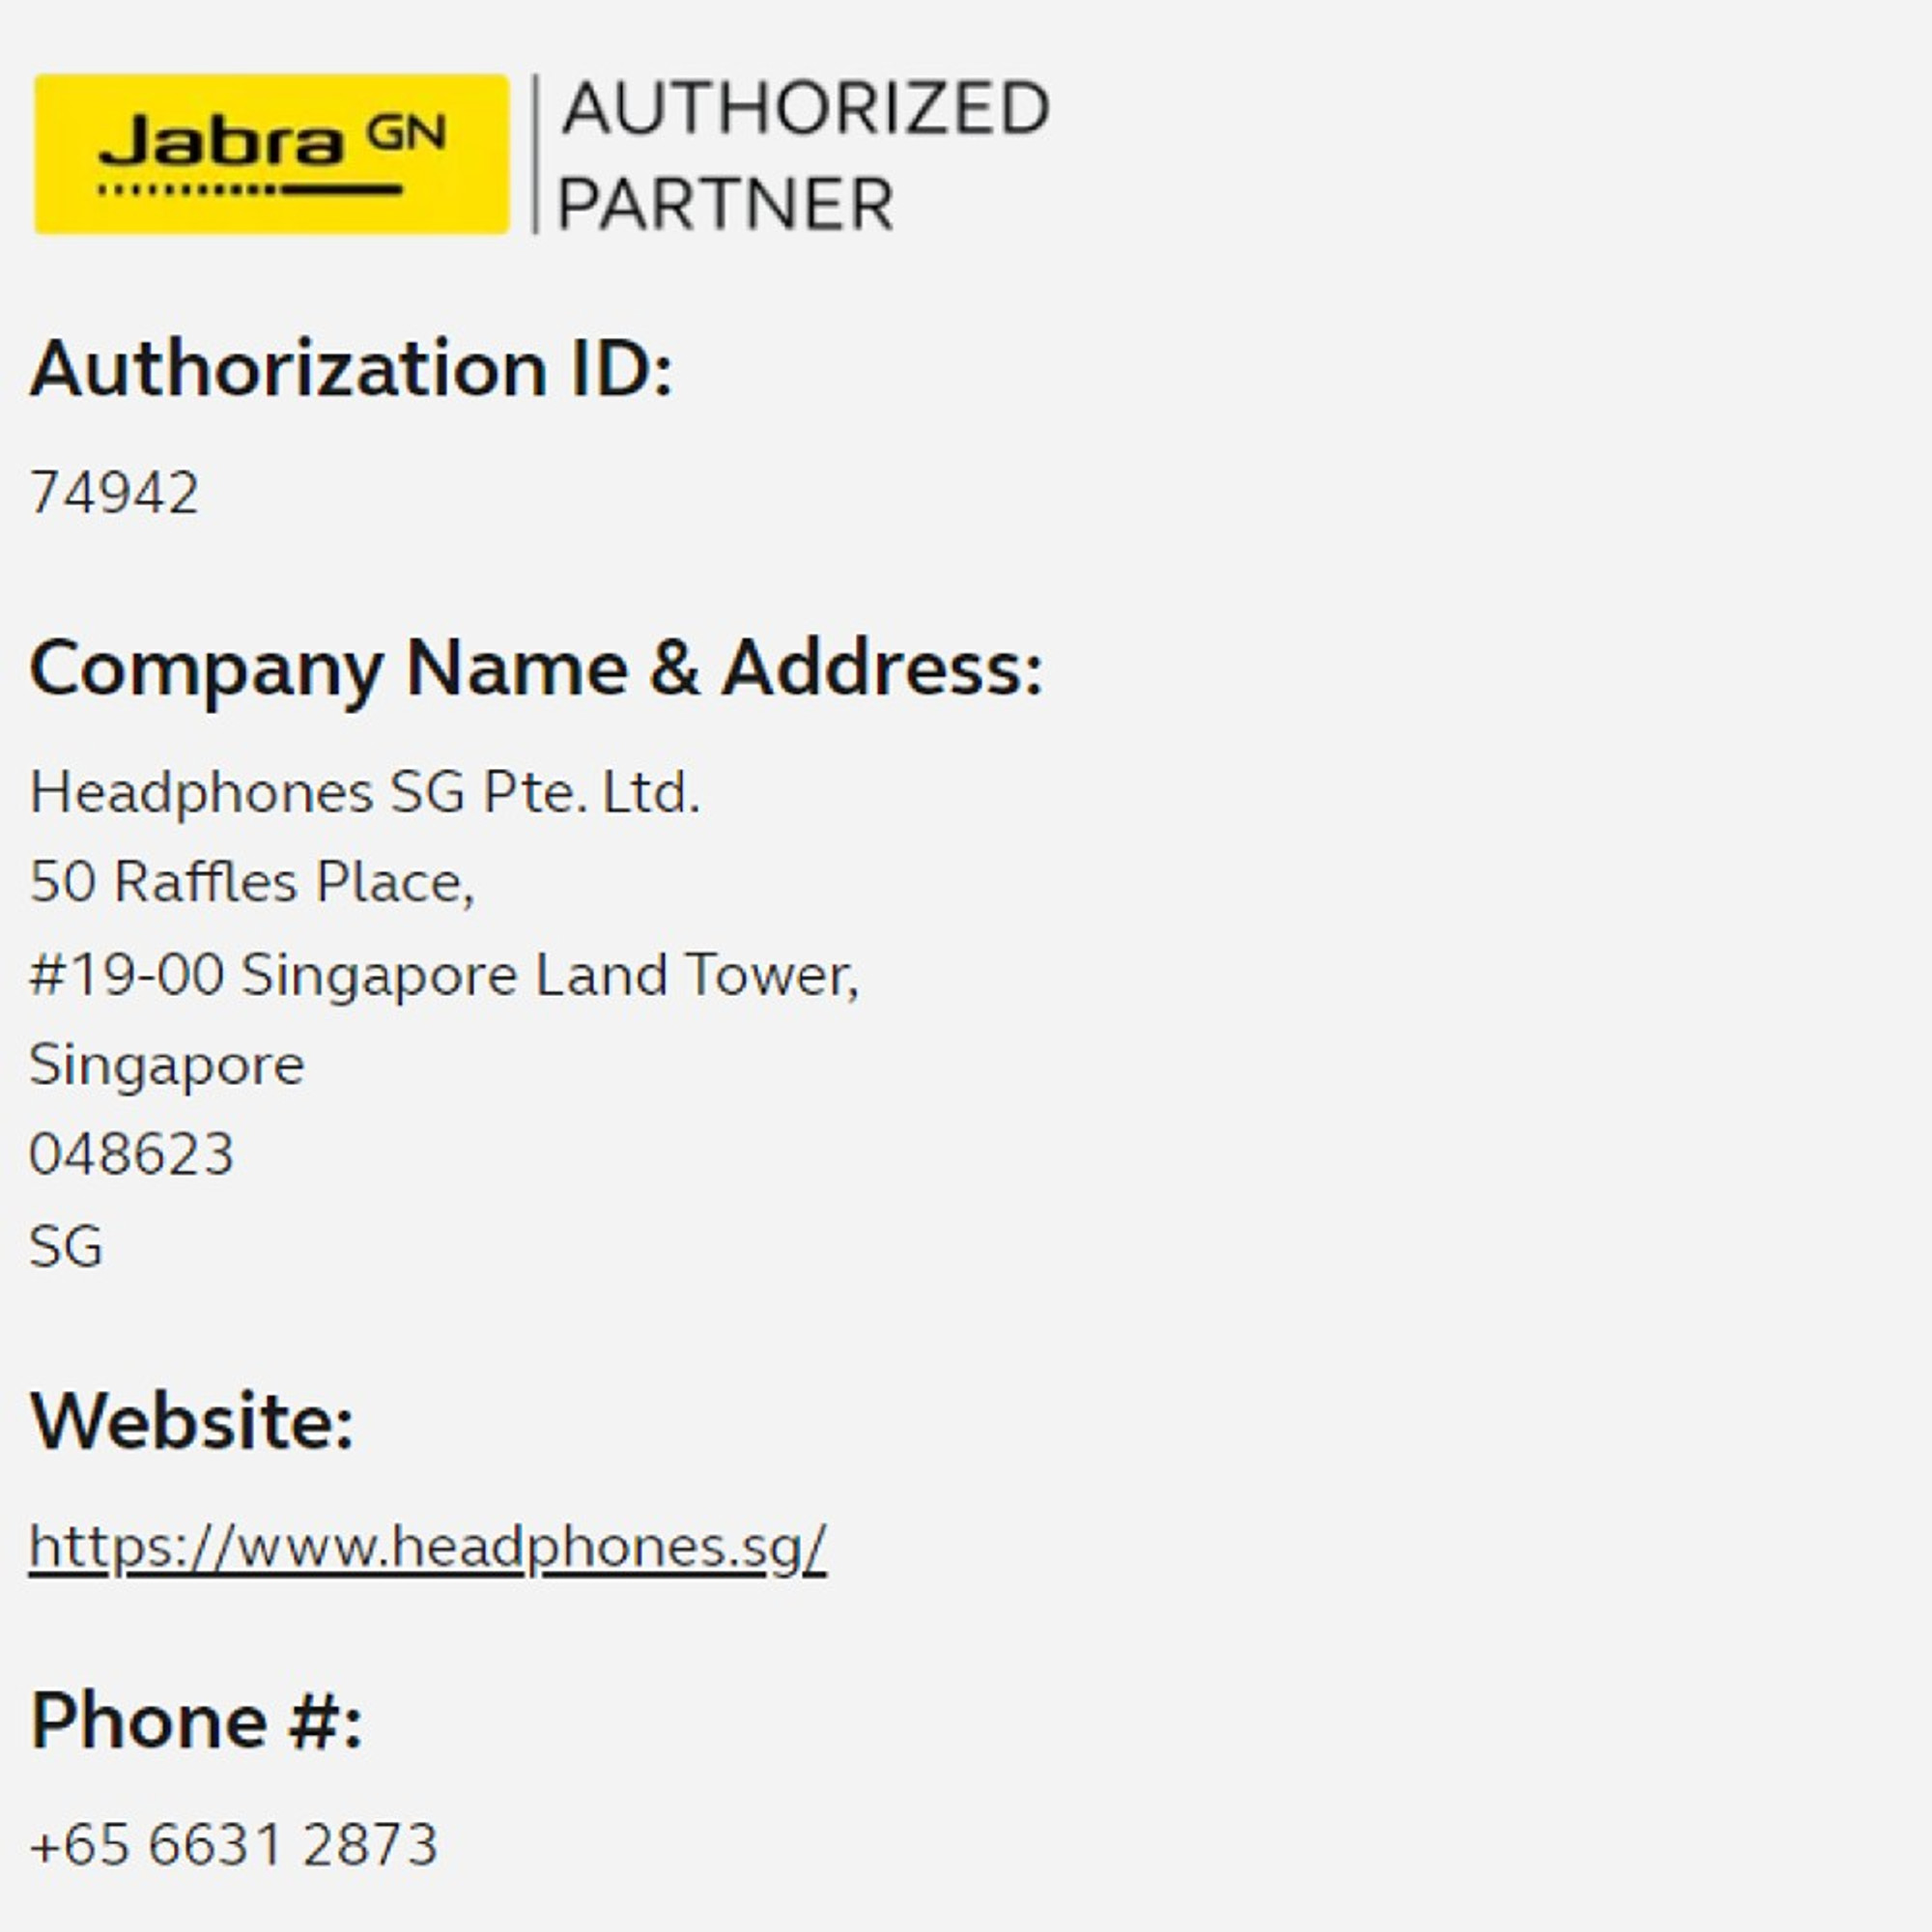 Jabra Evolve2 65 Flex Wireless Headset, Link 380a, Stereo Black, MS Teams  Certified